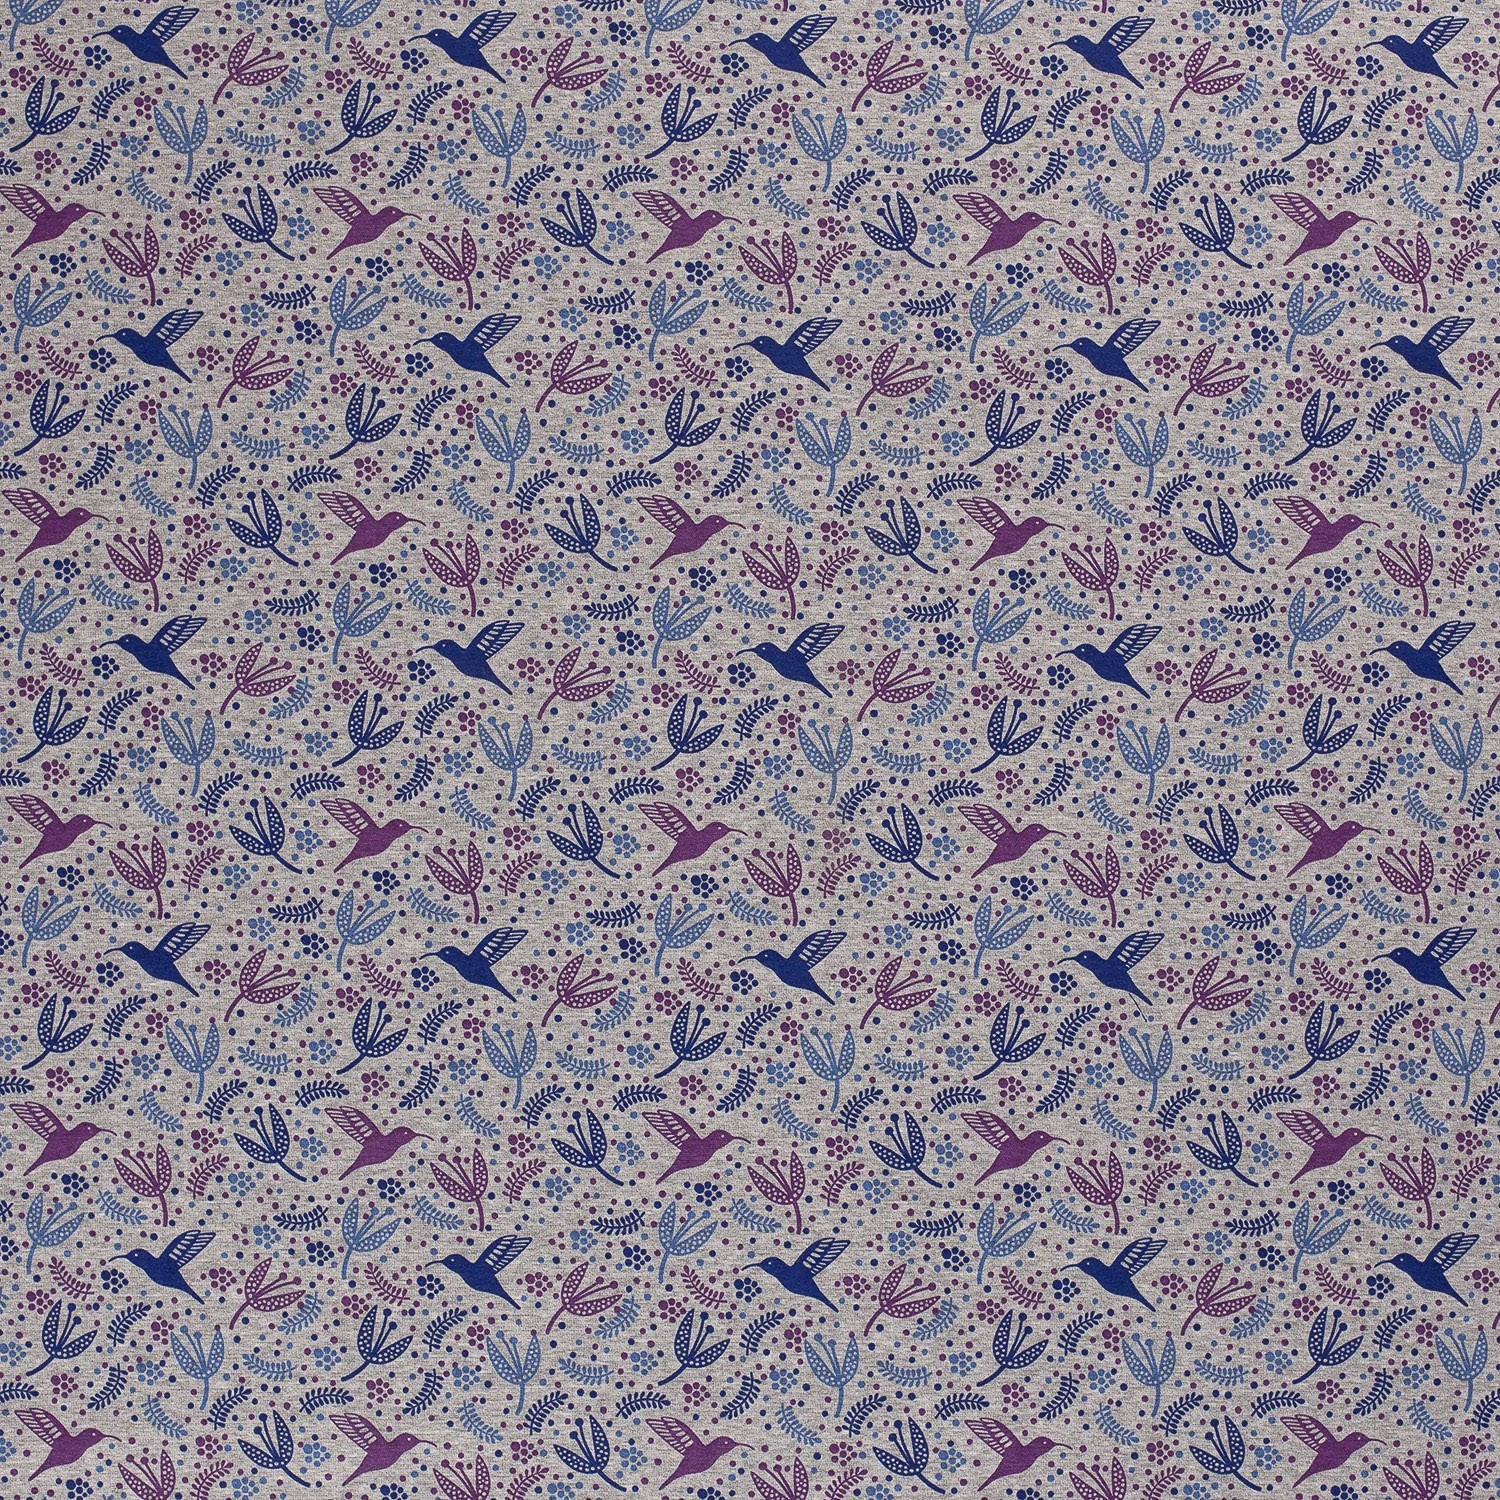 Tissu sweat polaire alpin imprimé feuilles bleu -1- La Boutik Creative de Rives